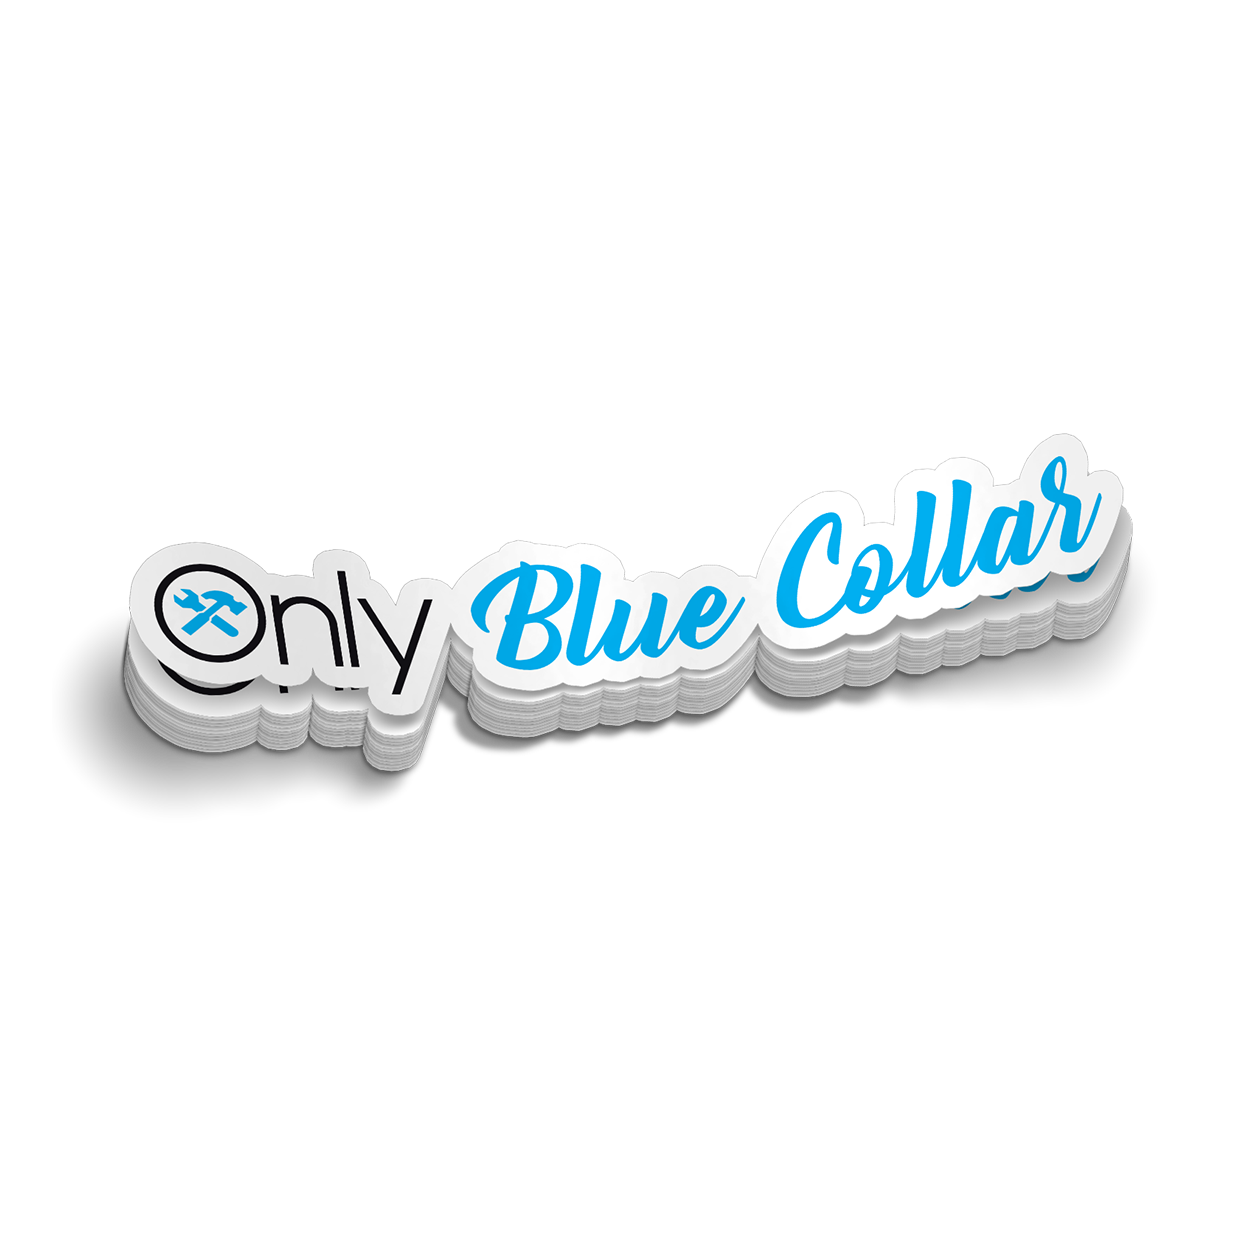 Blue Collar Proud Hvac Txv - Blue Collar - Sticker